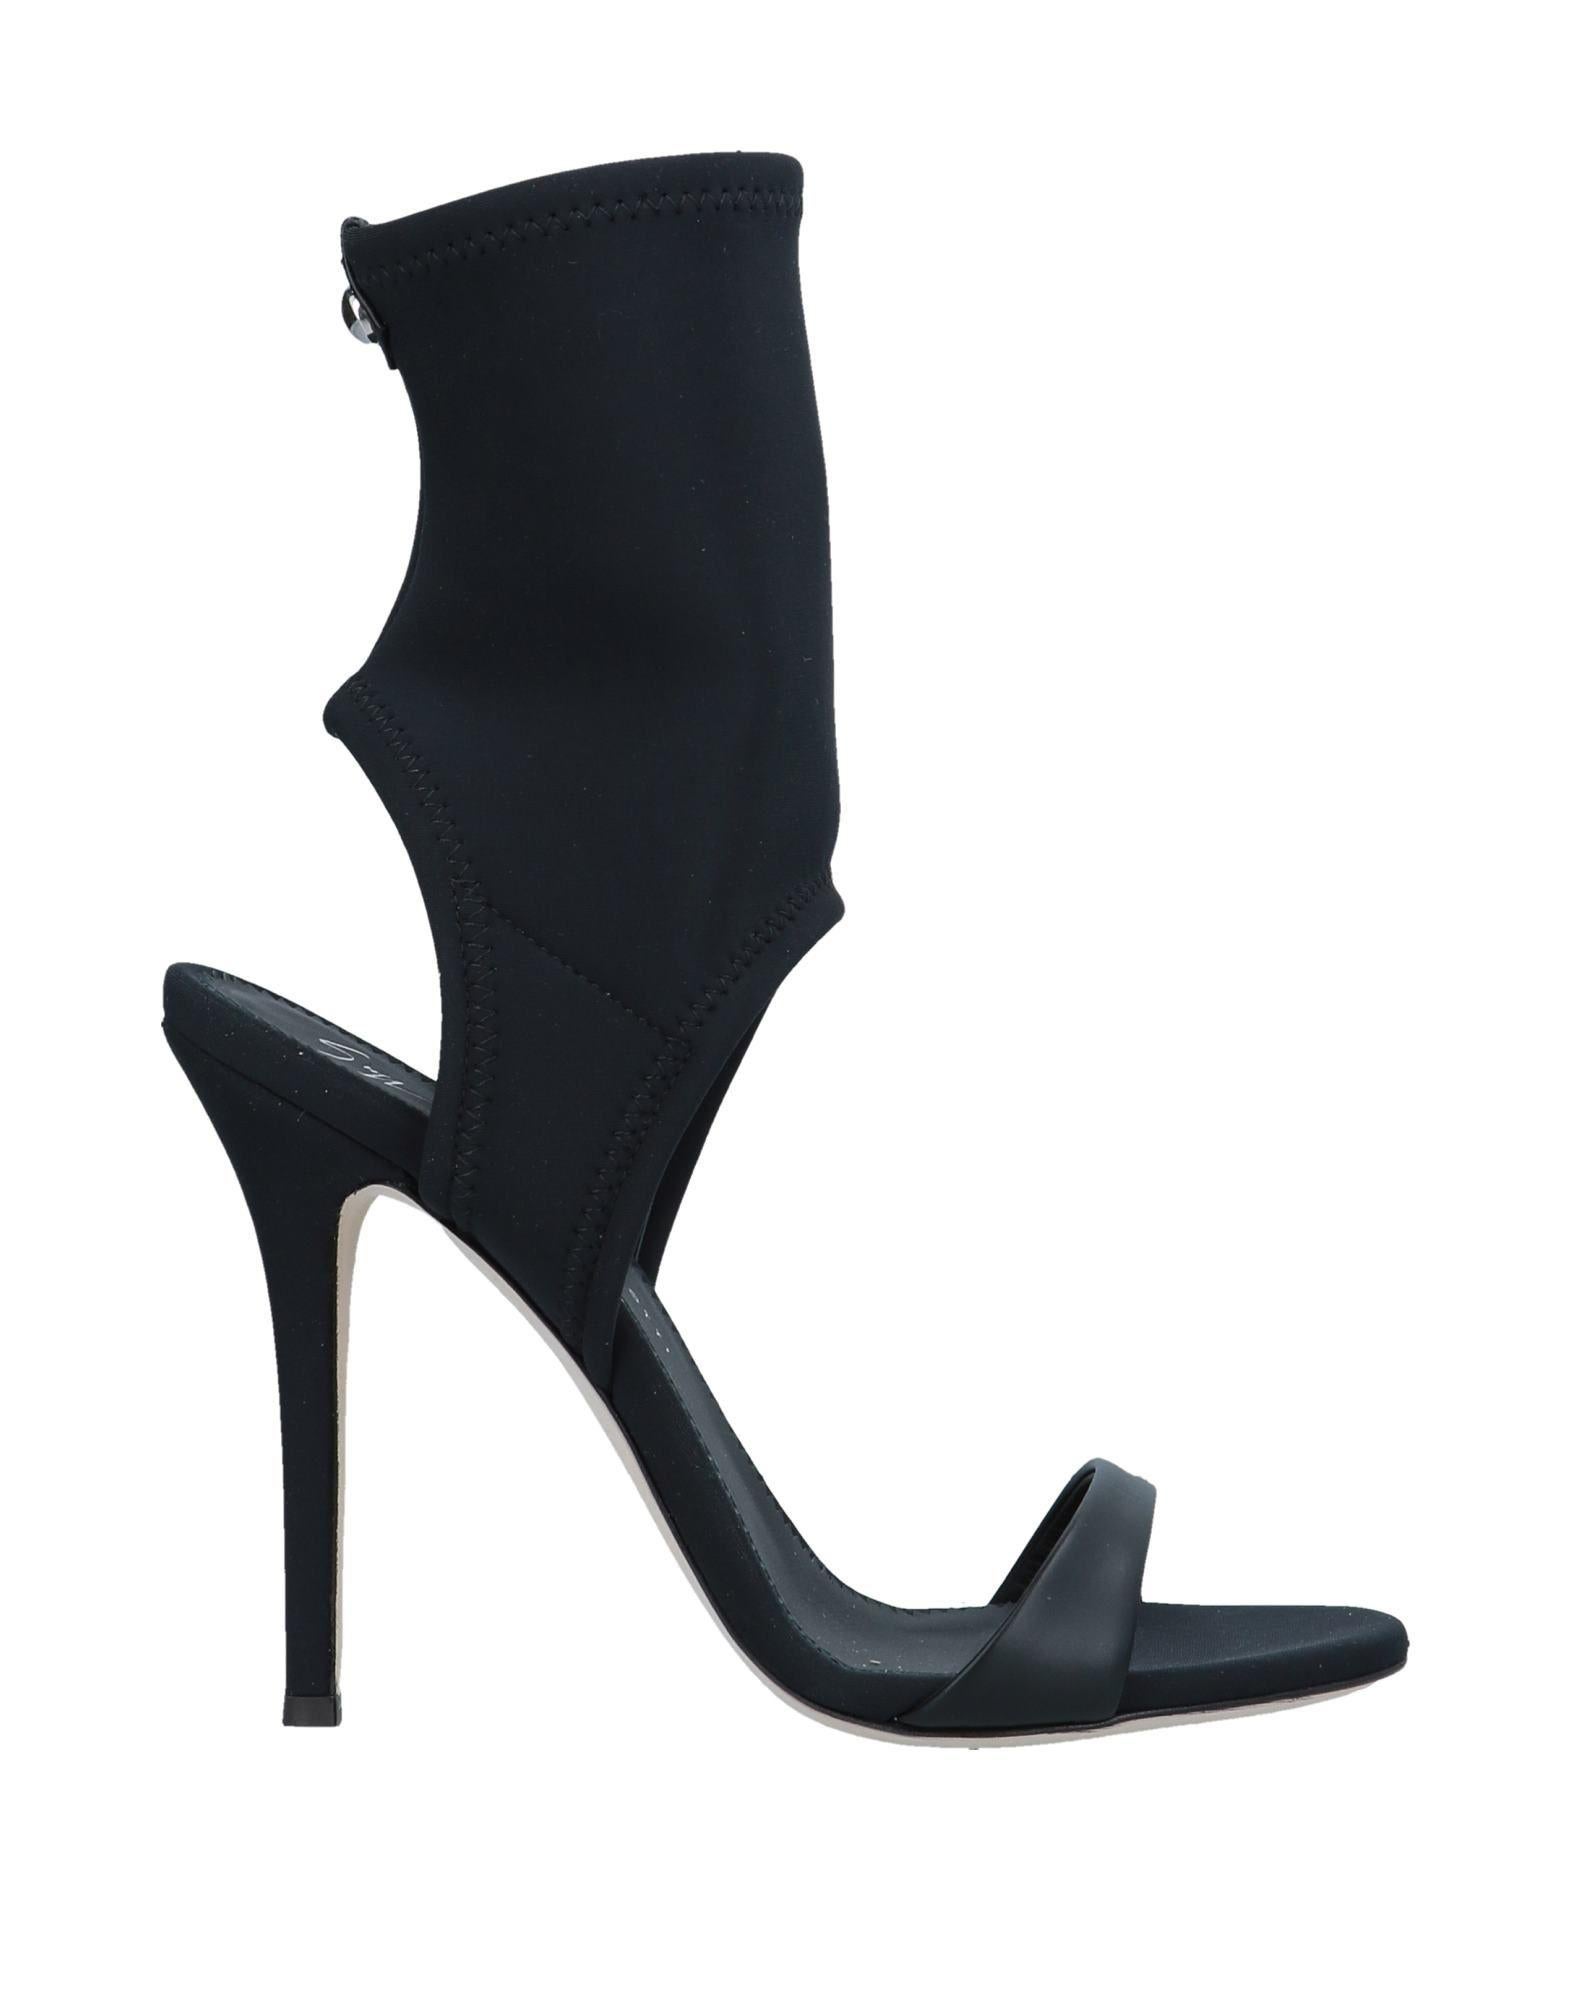 Women's Giuseppe Zanotti NEW Black Sock Evening Boots Booties Heels in Box